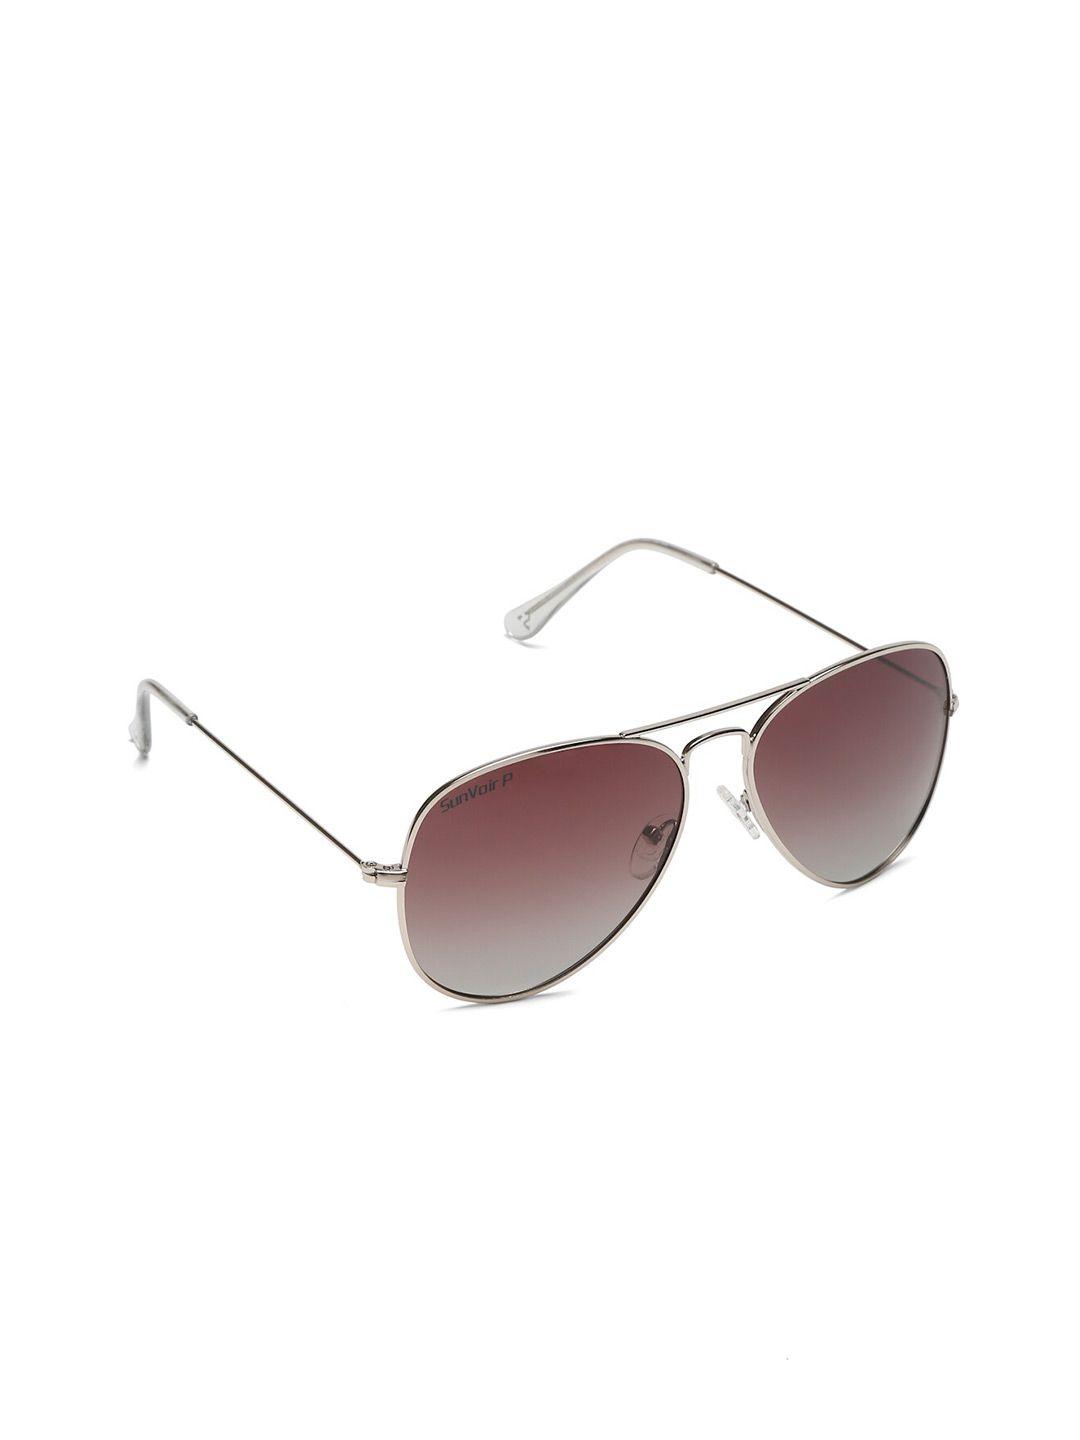 sunvoir unisex brown lens & silver-toned aviator sunglasses with polarised lens